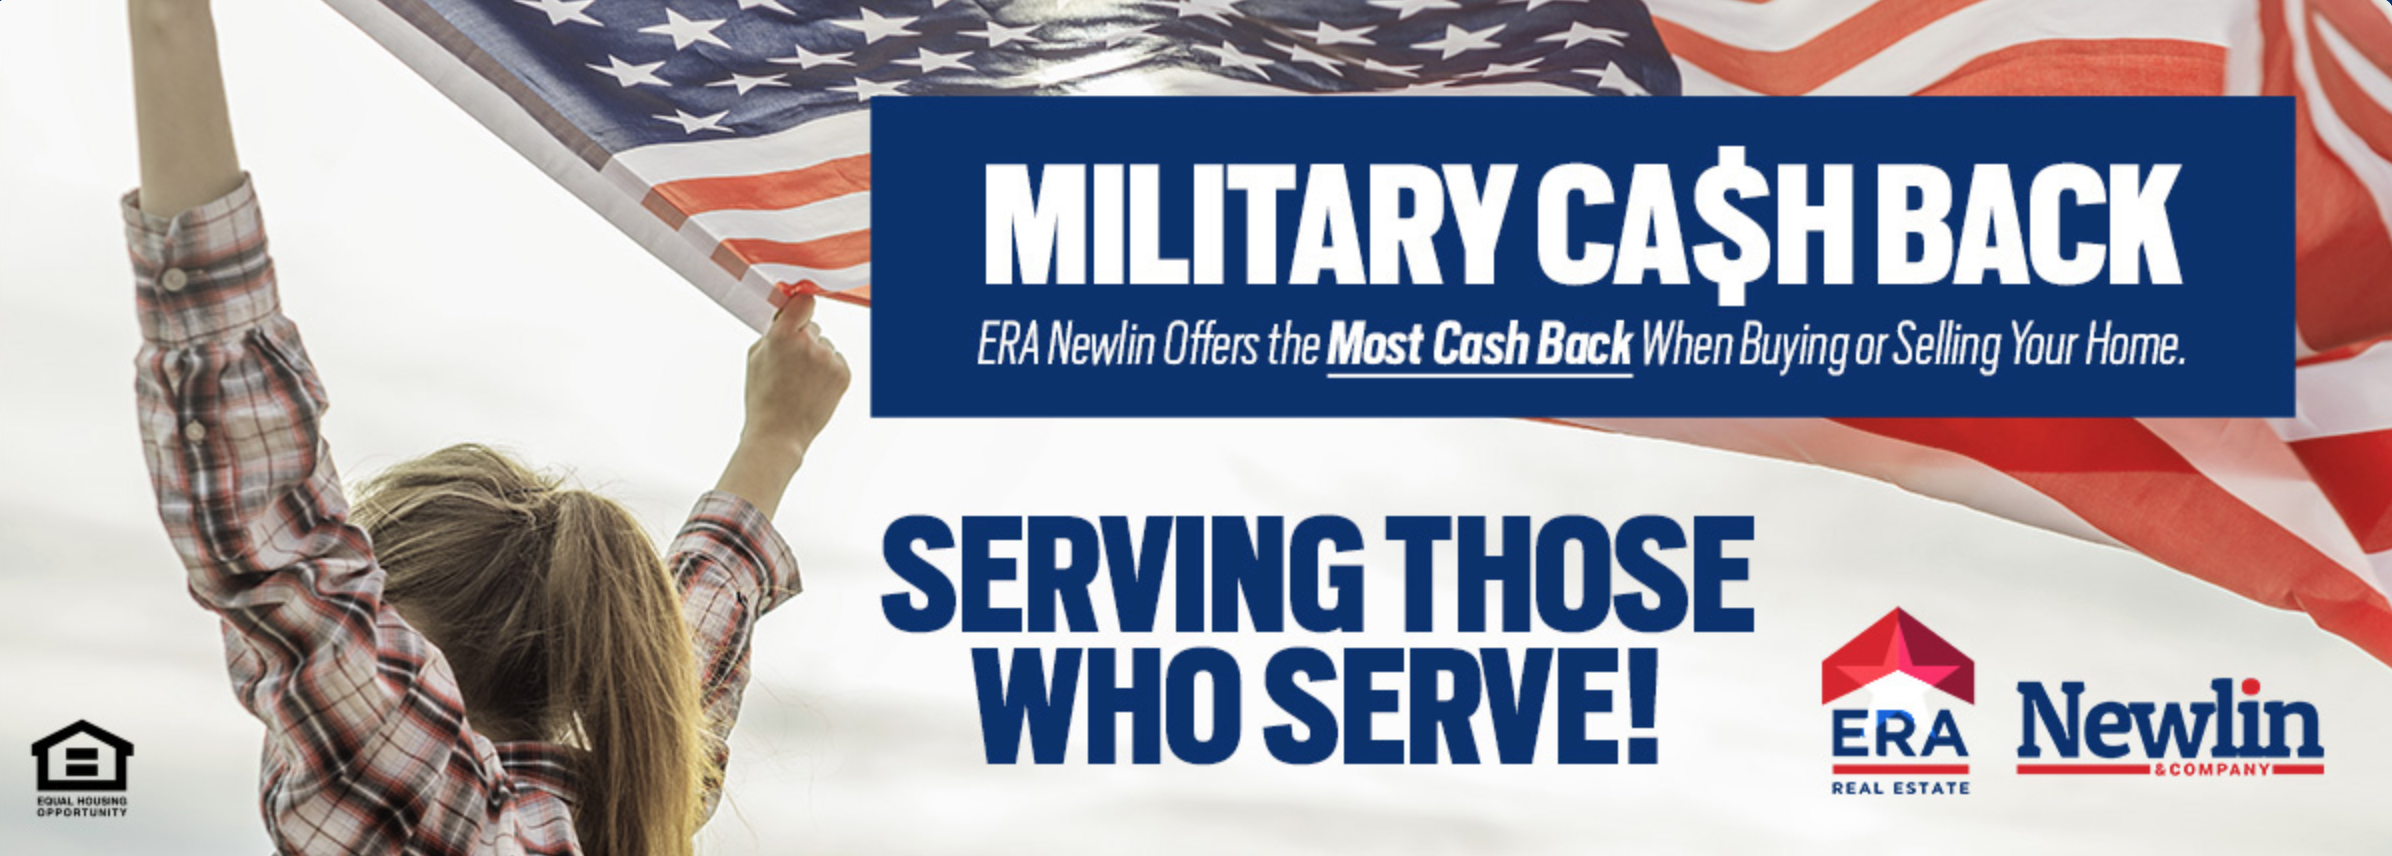 Military Cash Back: Serving Those Who Serve